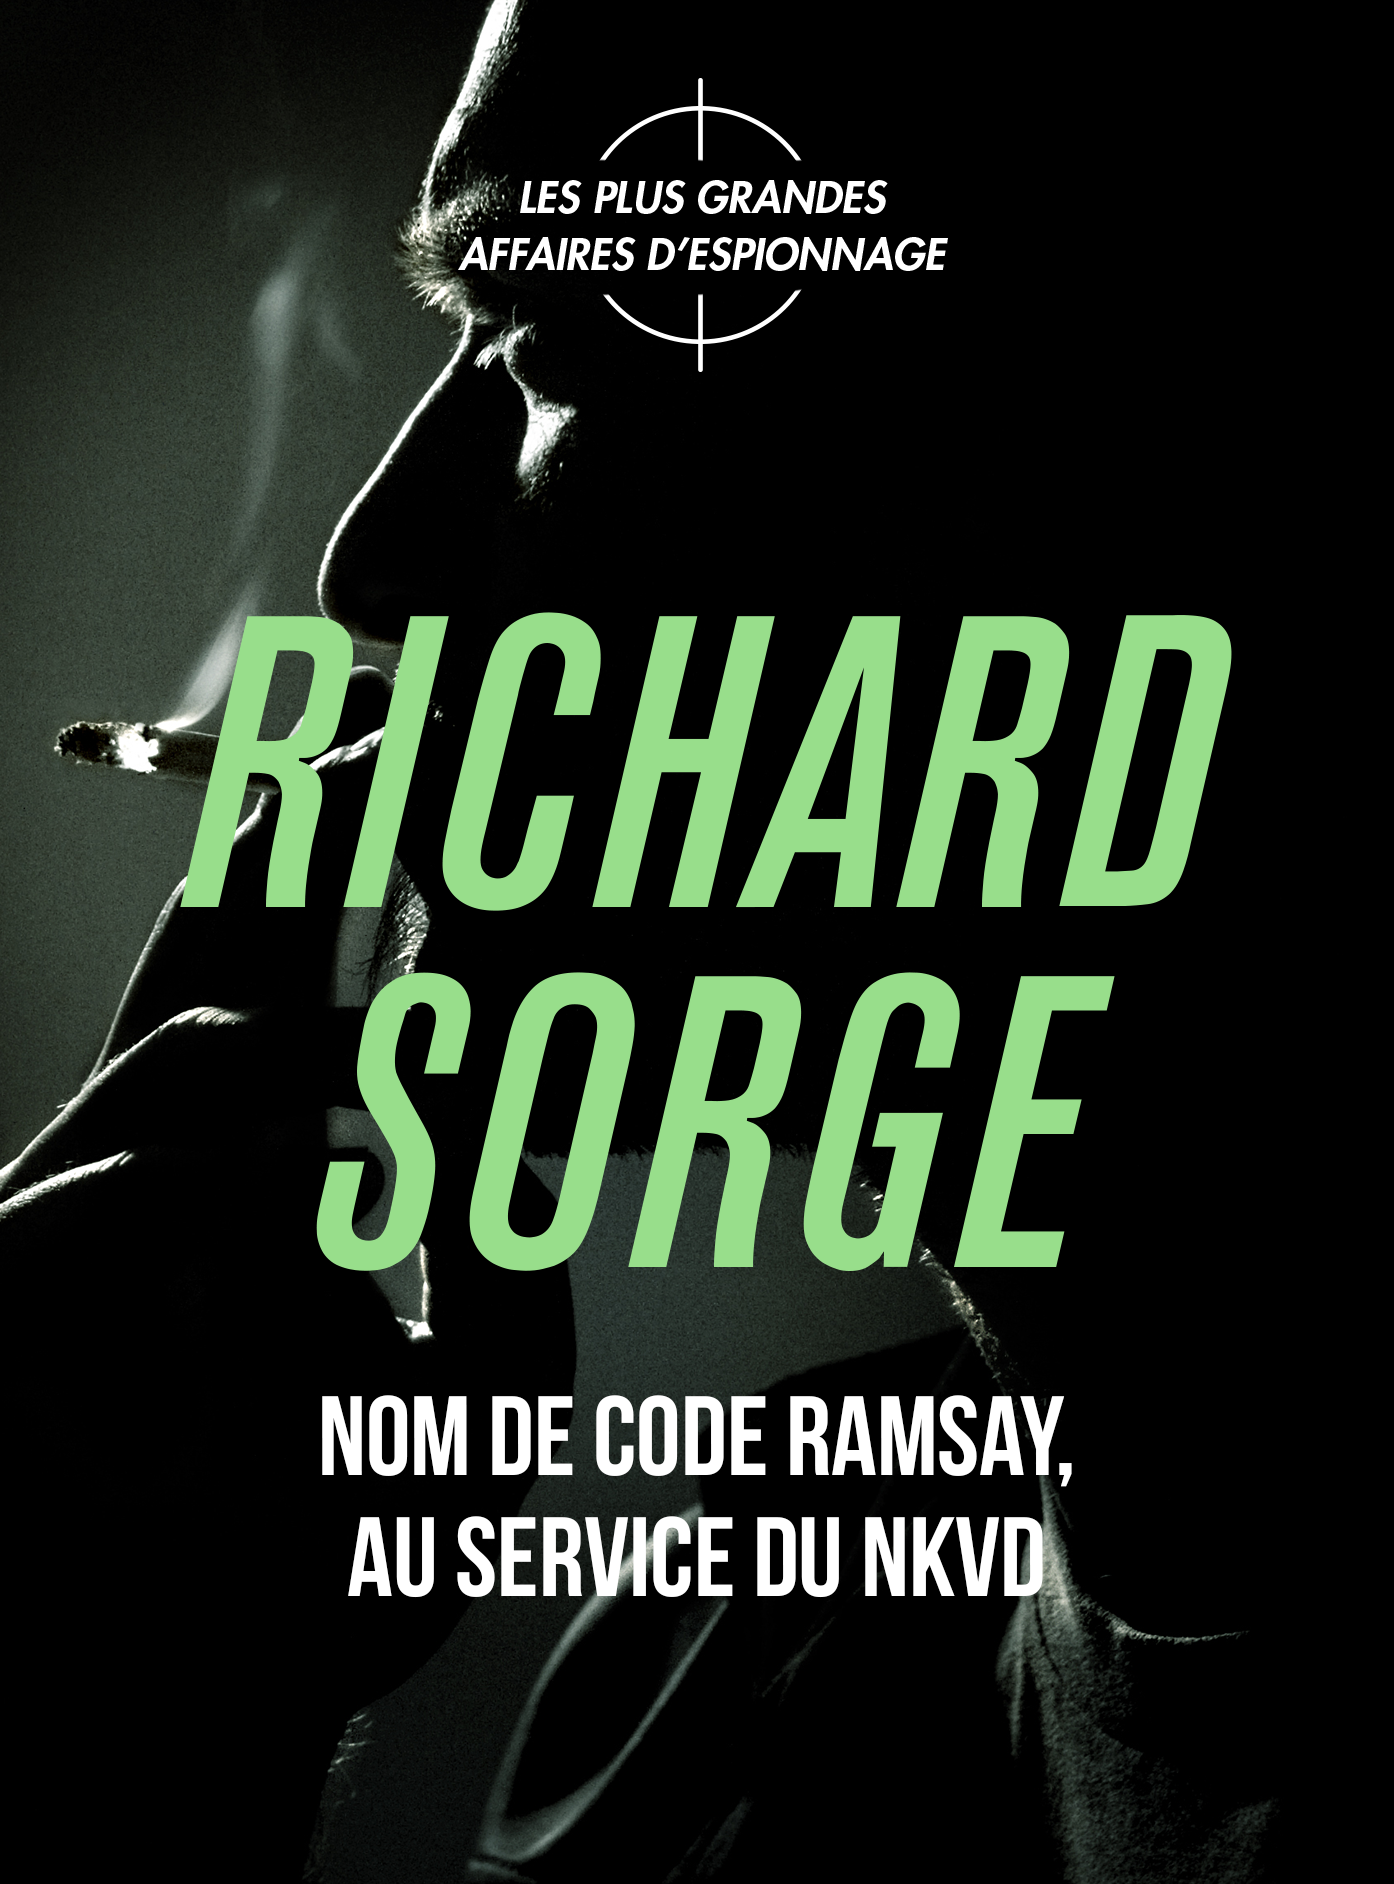 Richard Sorge, nom de code Ramsay, au service du NKVD